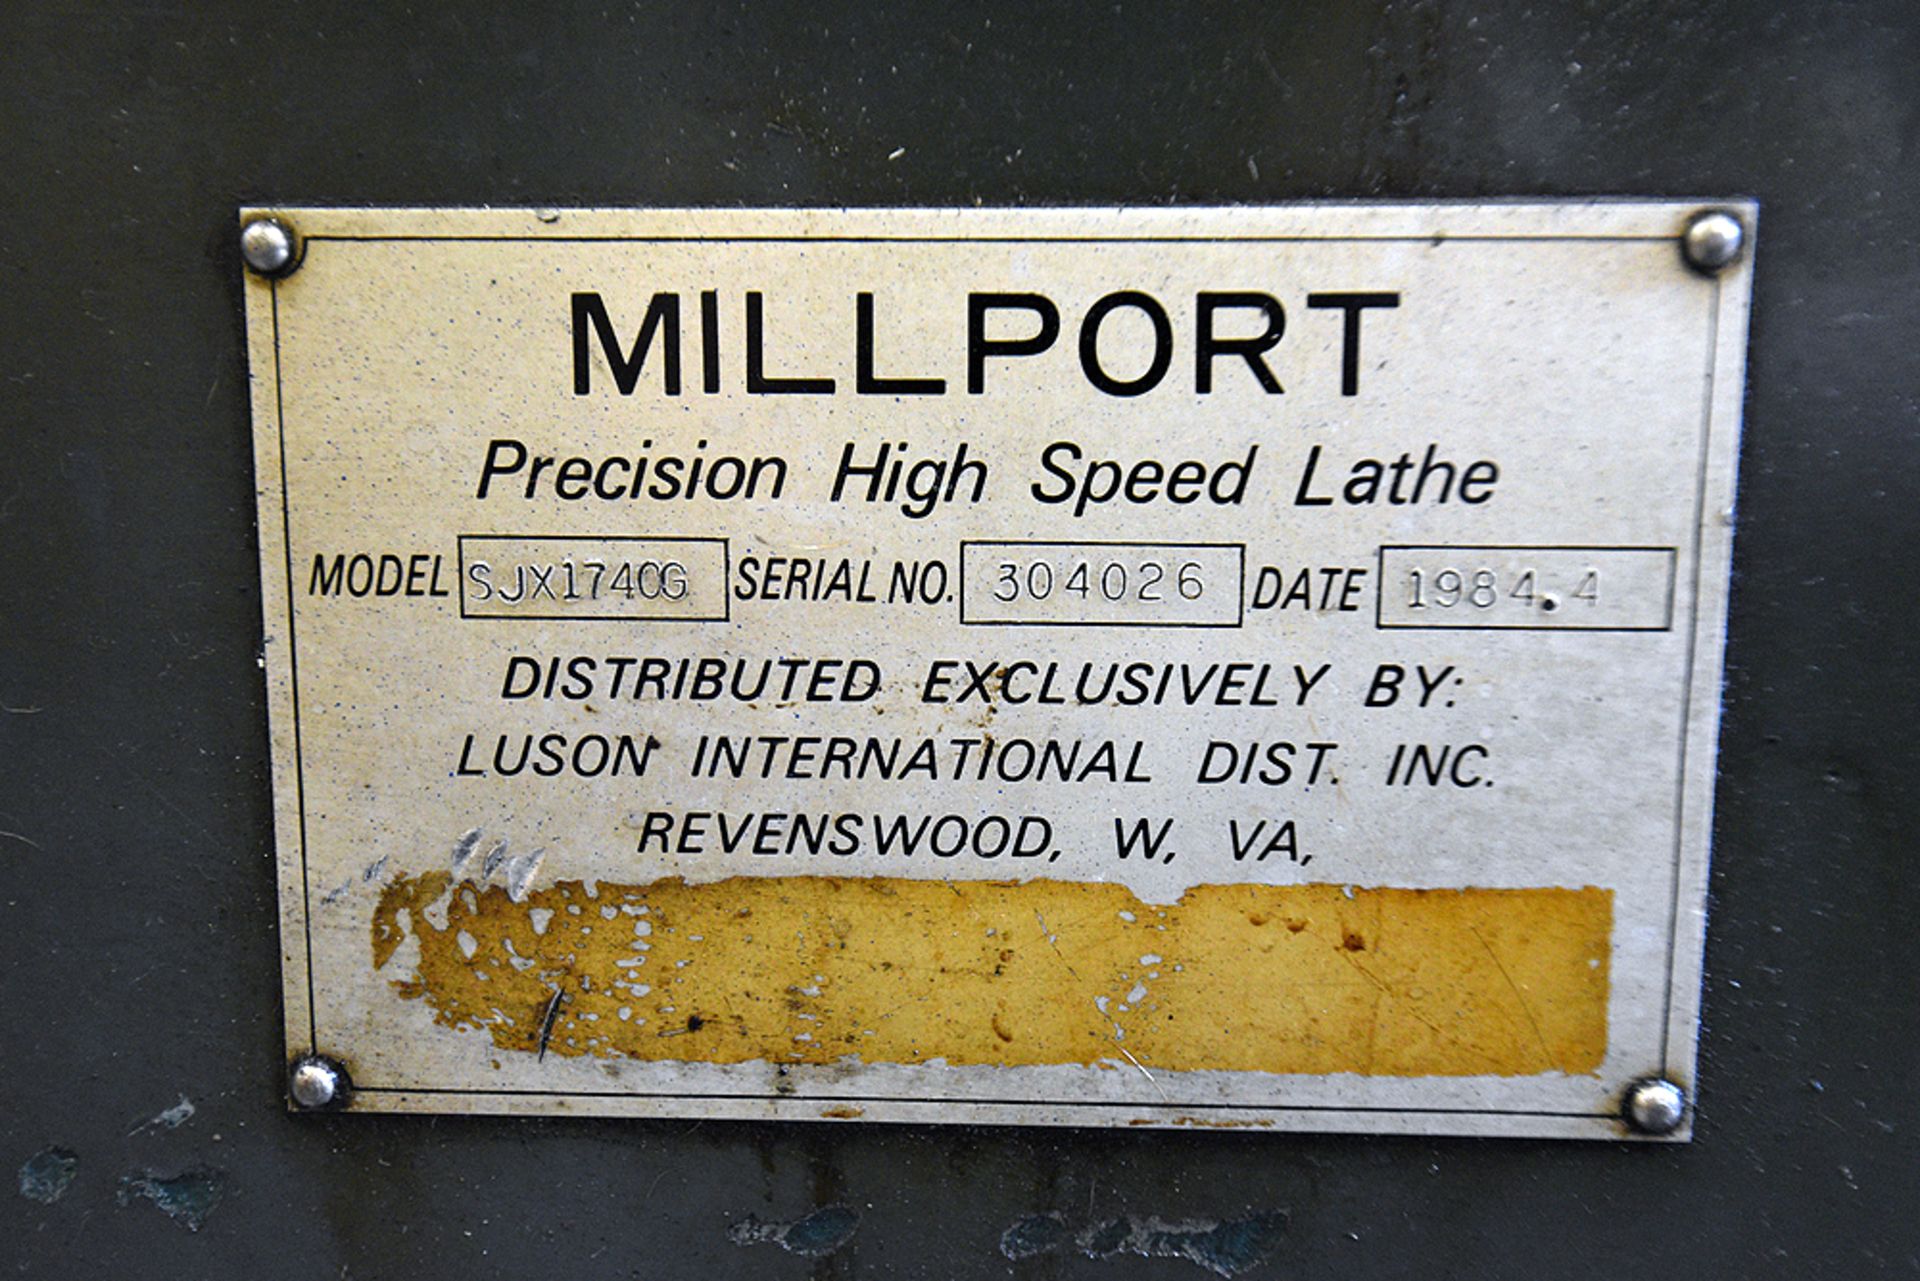 Millport SJX1740G, s/n 304026, 230v 3-PH, Lathe (40" DBC & 18" Swing) & Bison 3-Jaw Chuck (10"x3.5") - Image 12 of 13